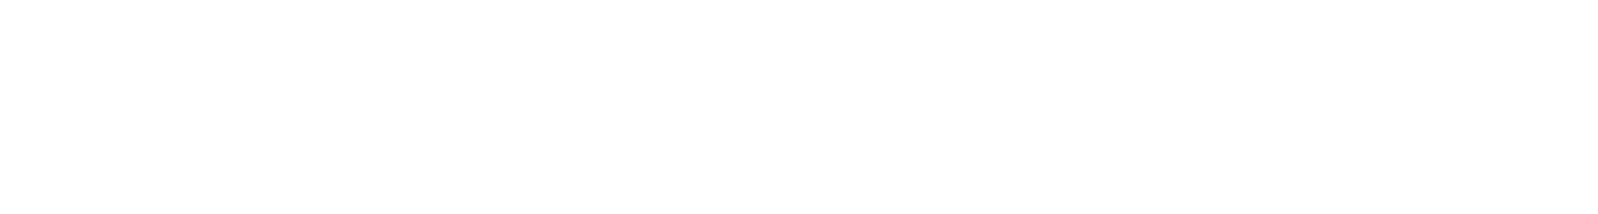 Sera - OnePage Logo by Gleesik